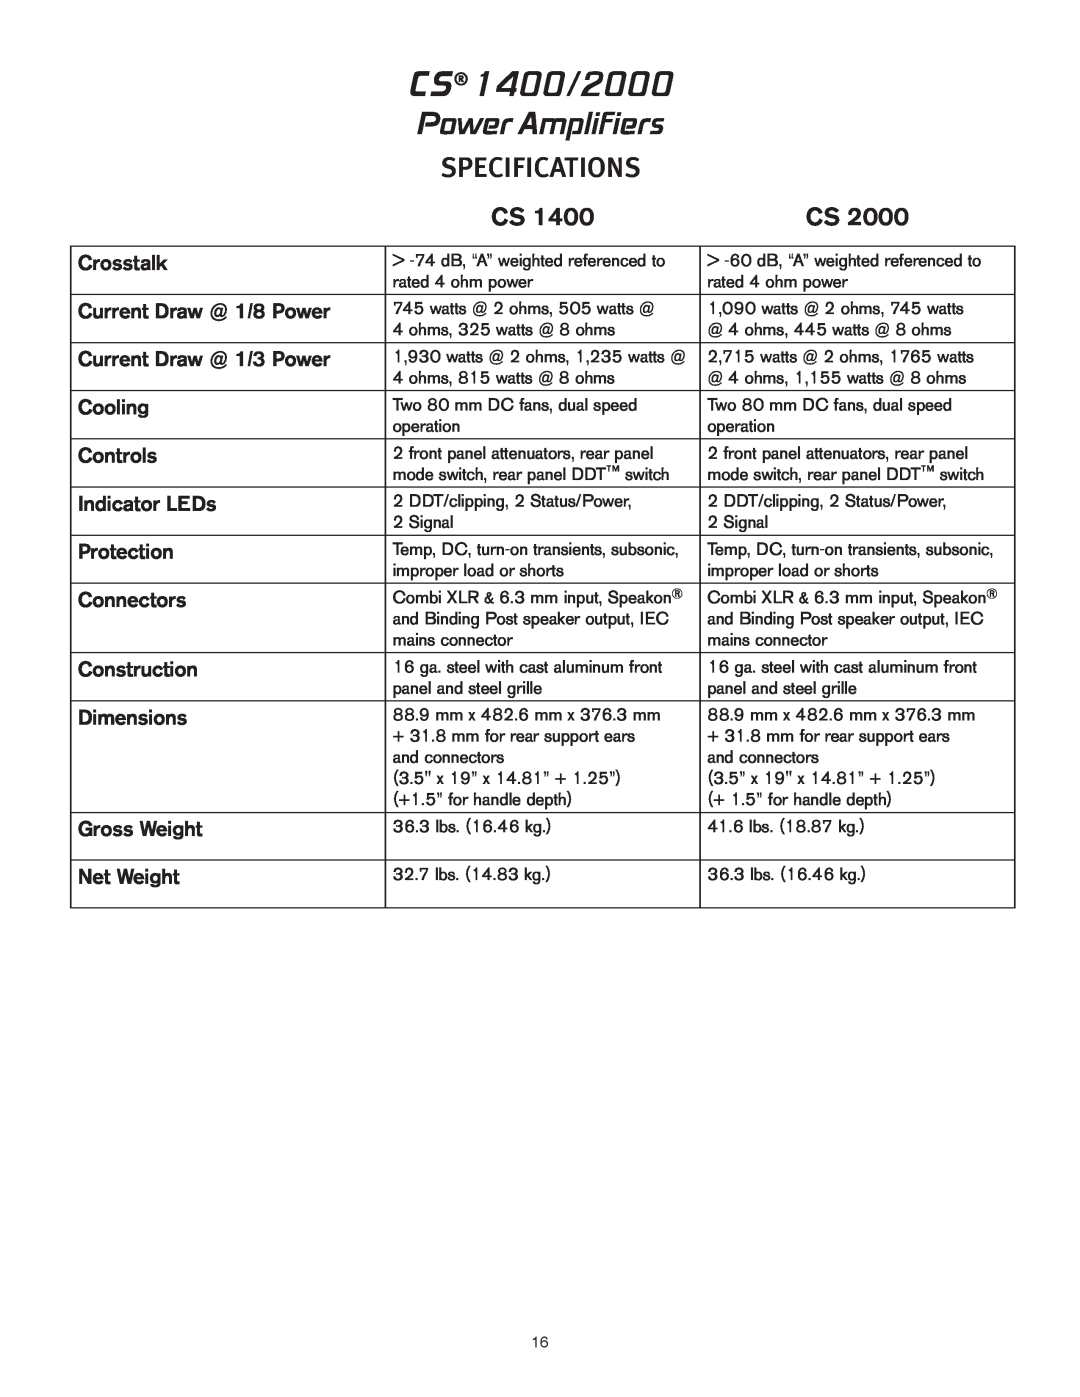 Peavey owner manual CS 1400/2000, Power Amplifiers, Specifications, Crosstalk 